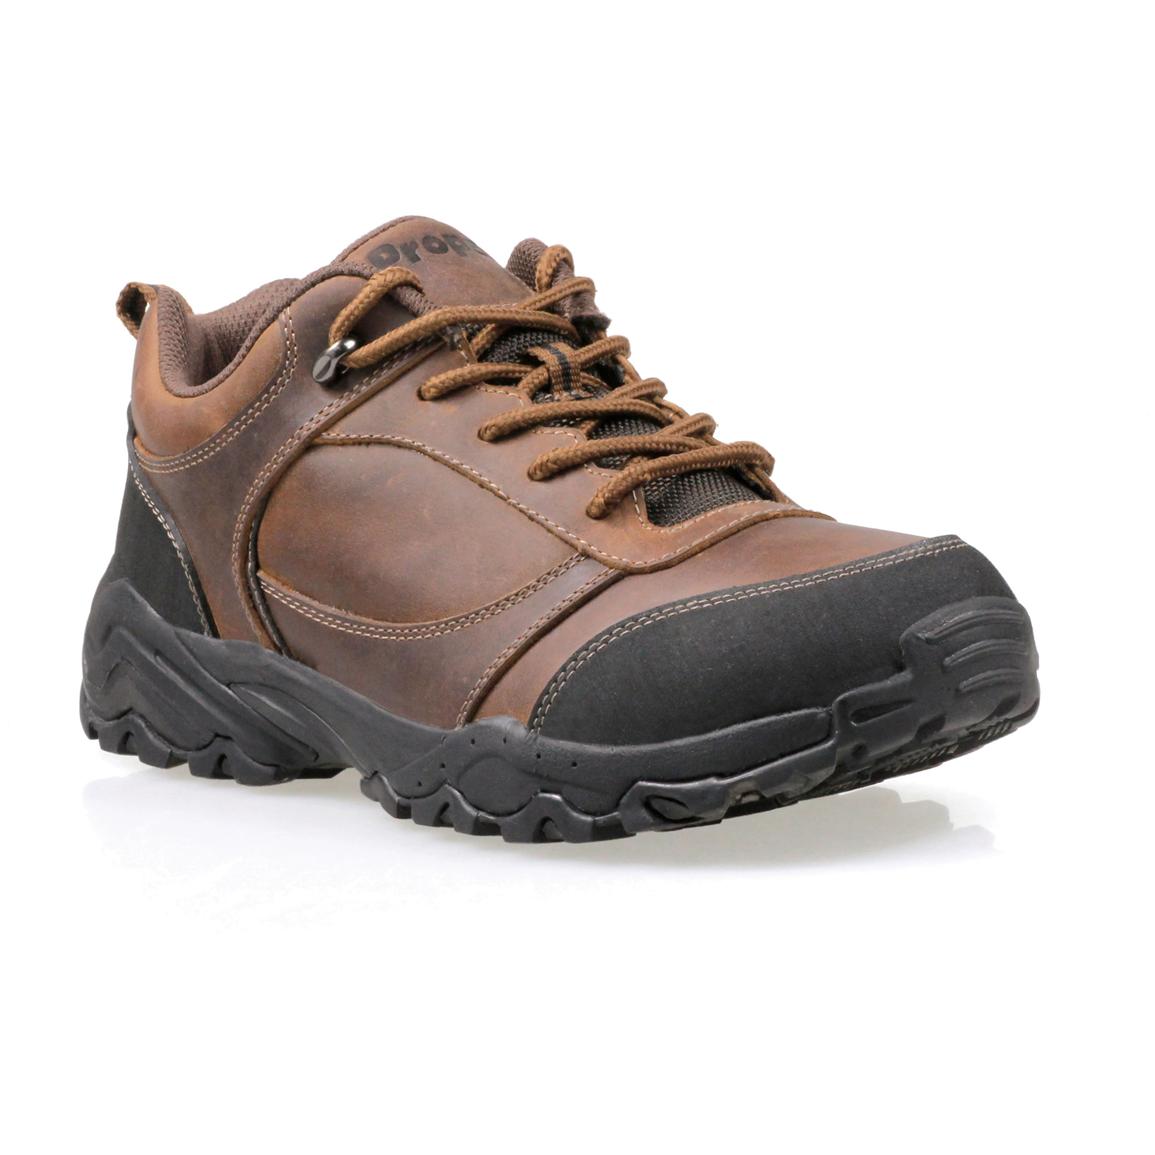 Men's Propet® Pathfinder Waterproof Trail Shoes, Brown - 428055, Hiking ...